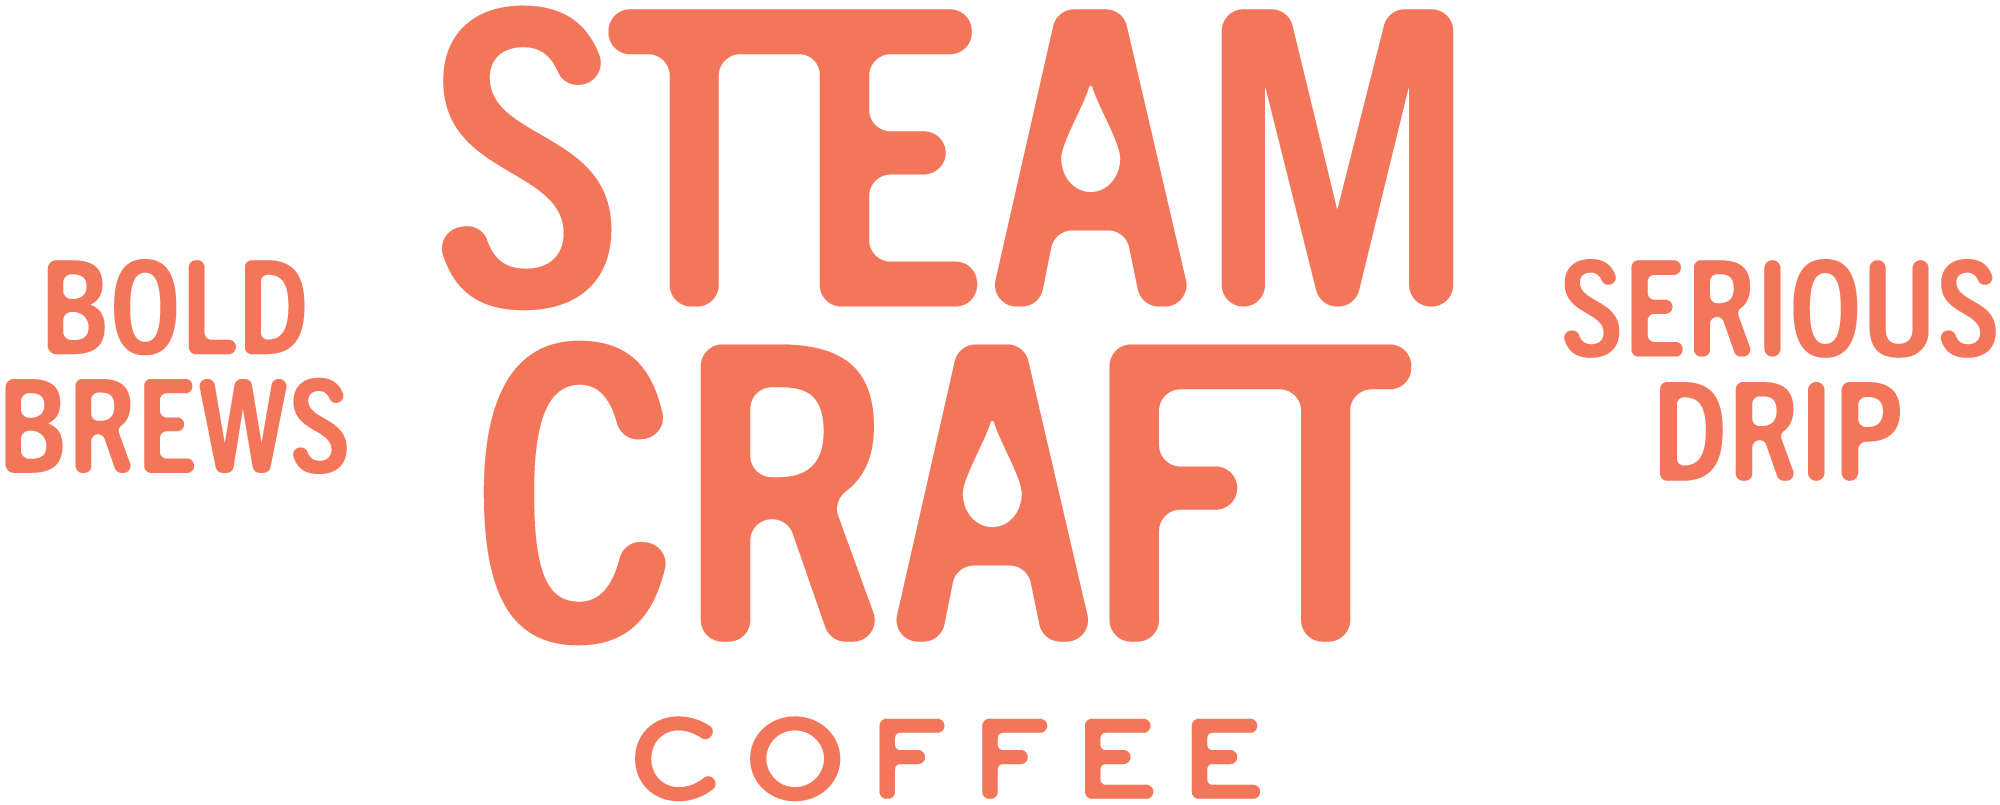 Steam Craft Coffee